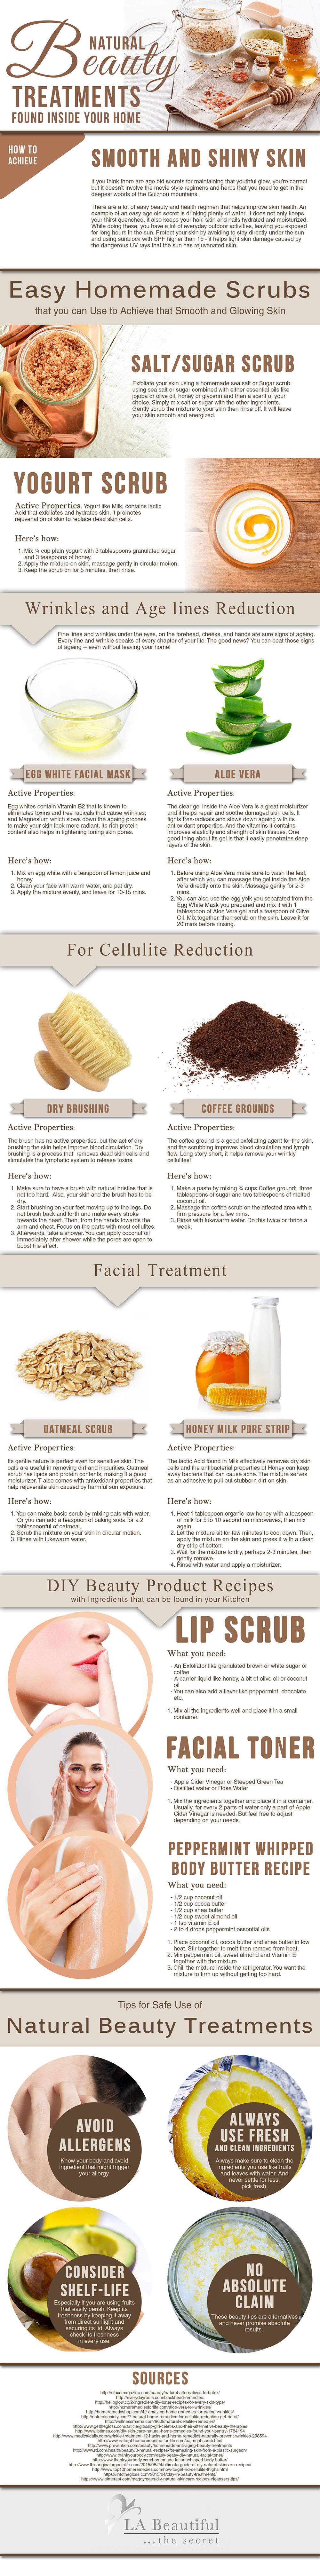 Natural Beauty Treatments